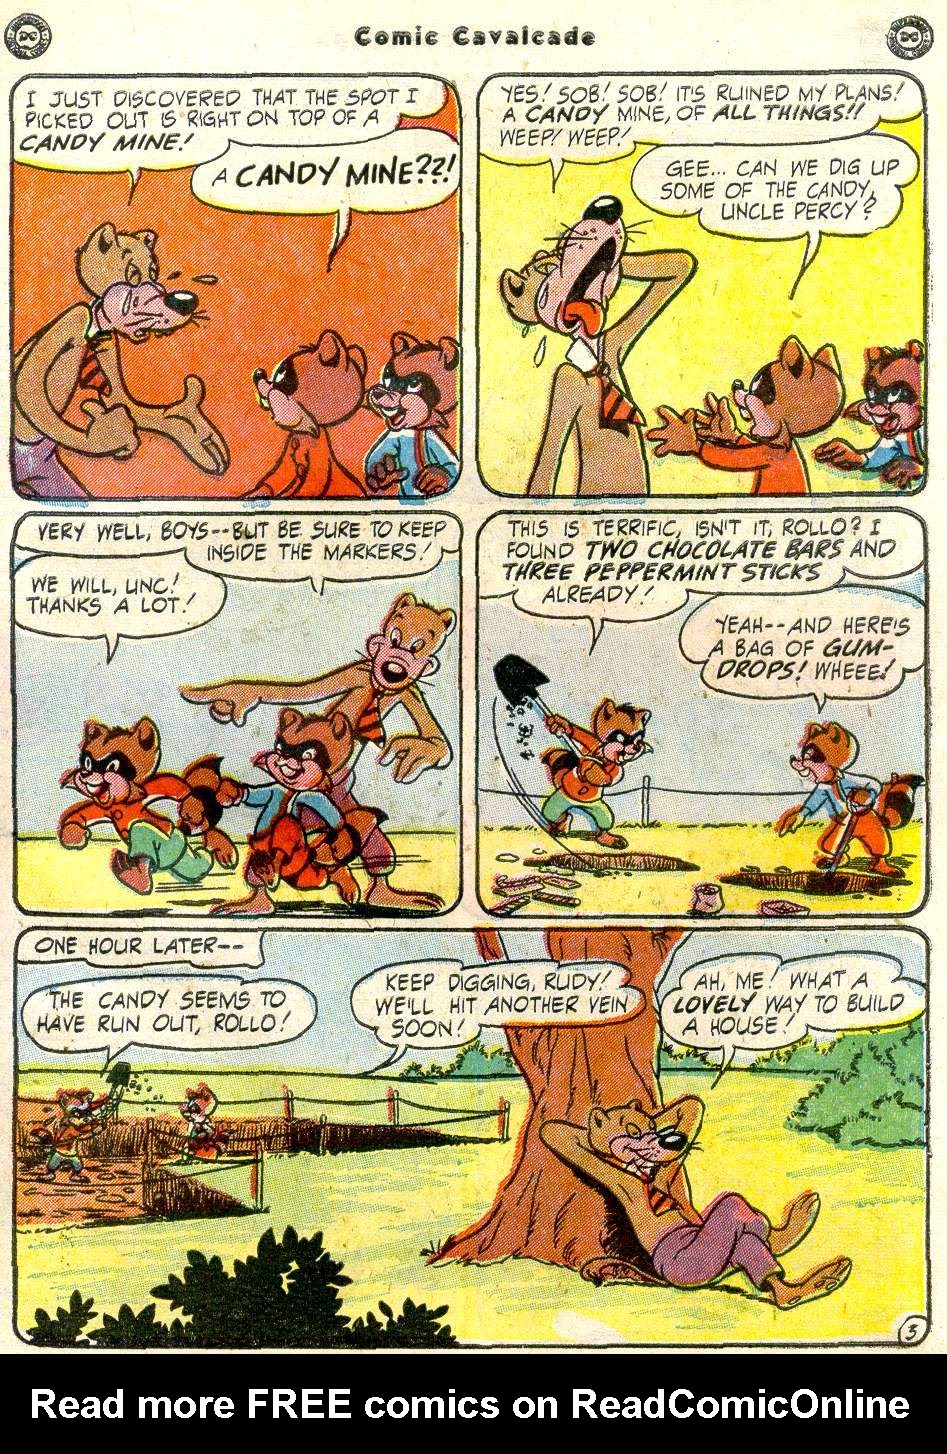 Comic Cavalcade issue 43 - Page 53